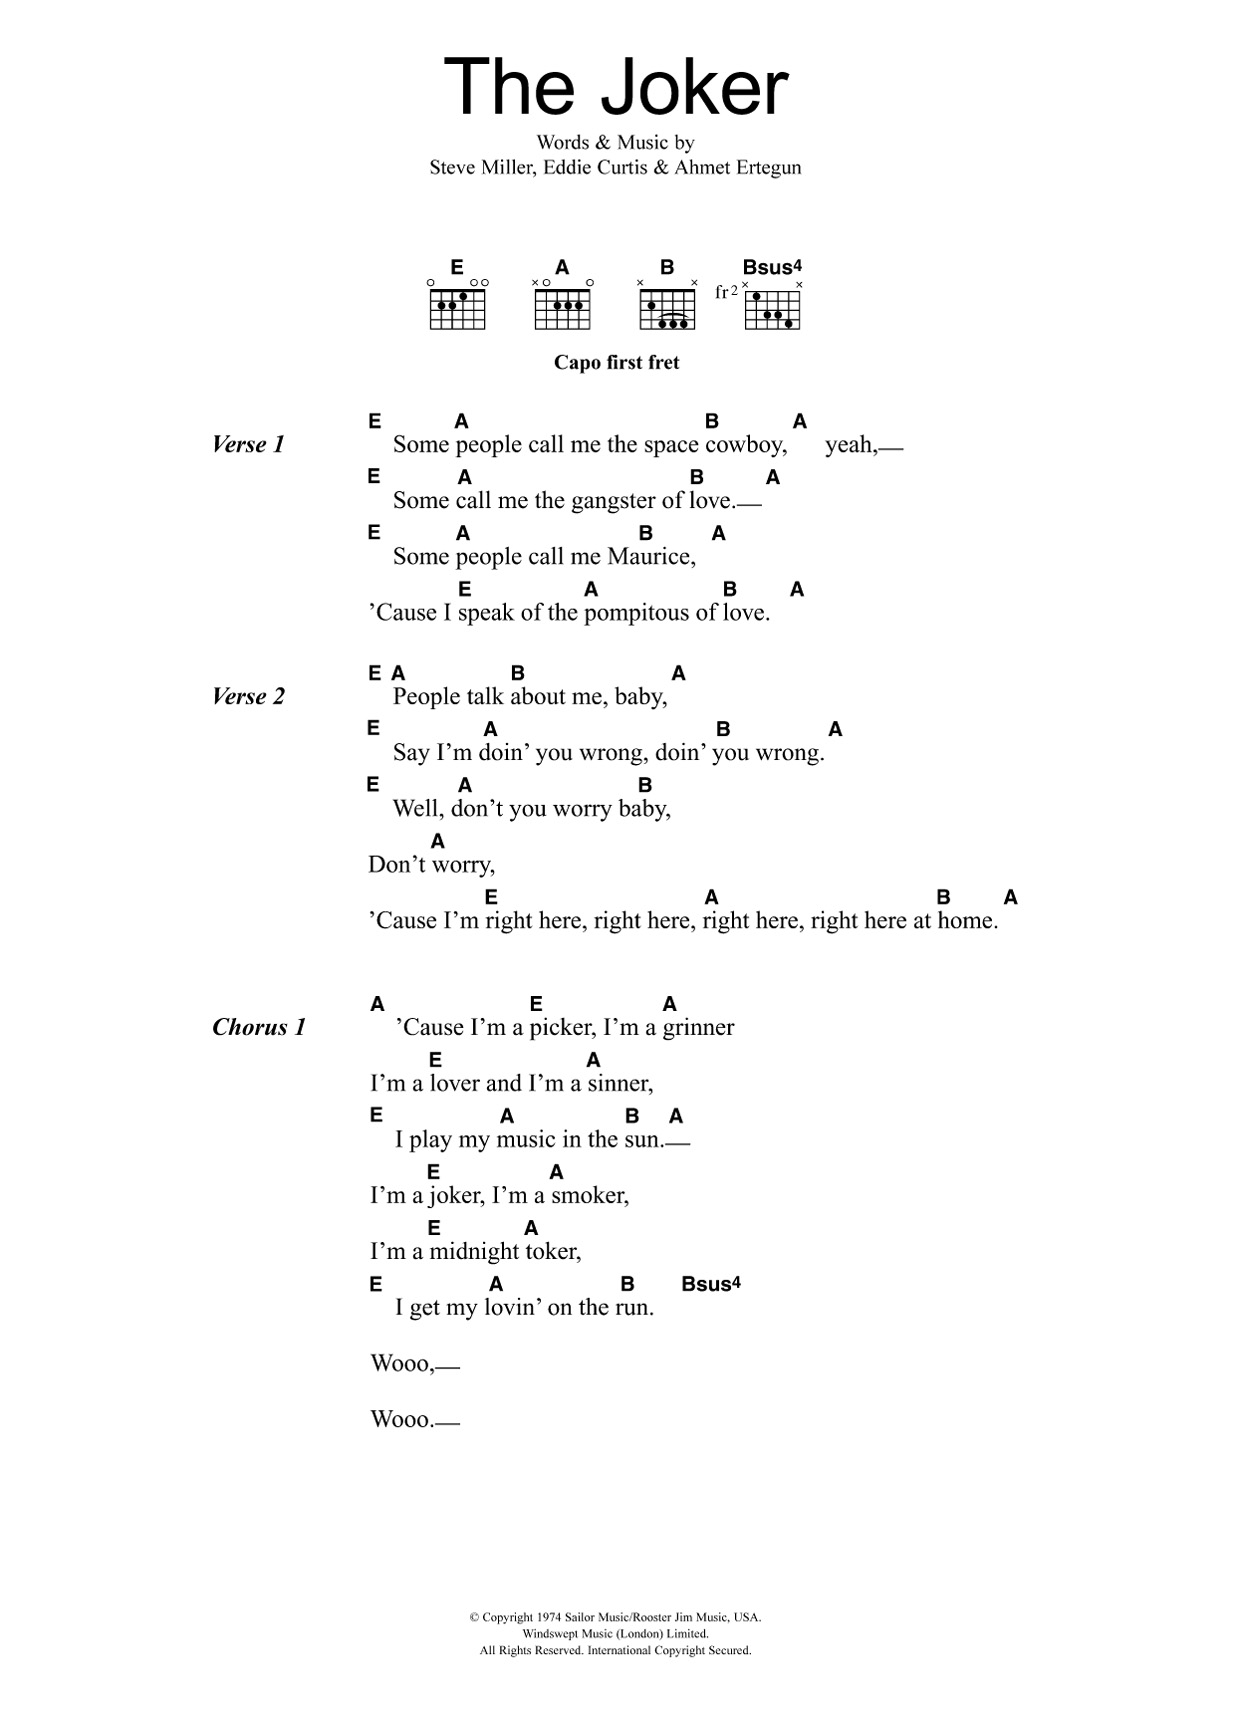 The Steve Miller Band The Joker Sheet Music Notes & Chords for Melody Line, Lyrics & Chords - Download or Print PDF